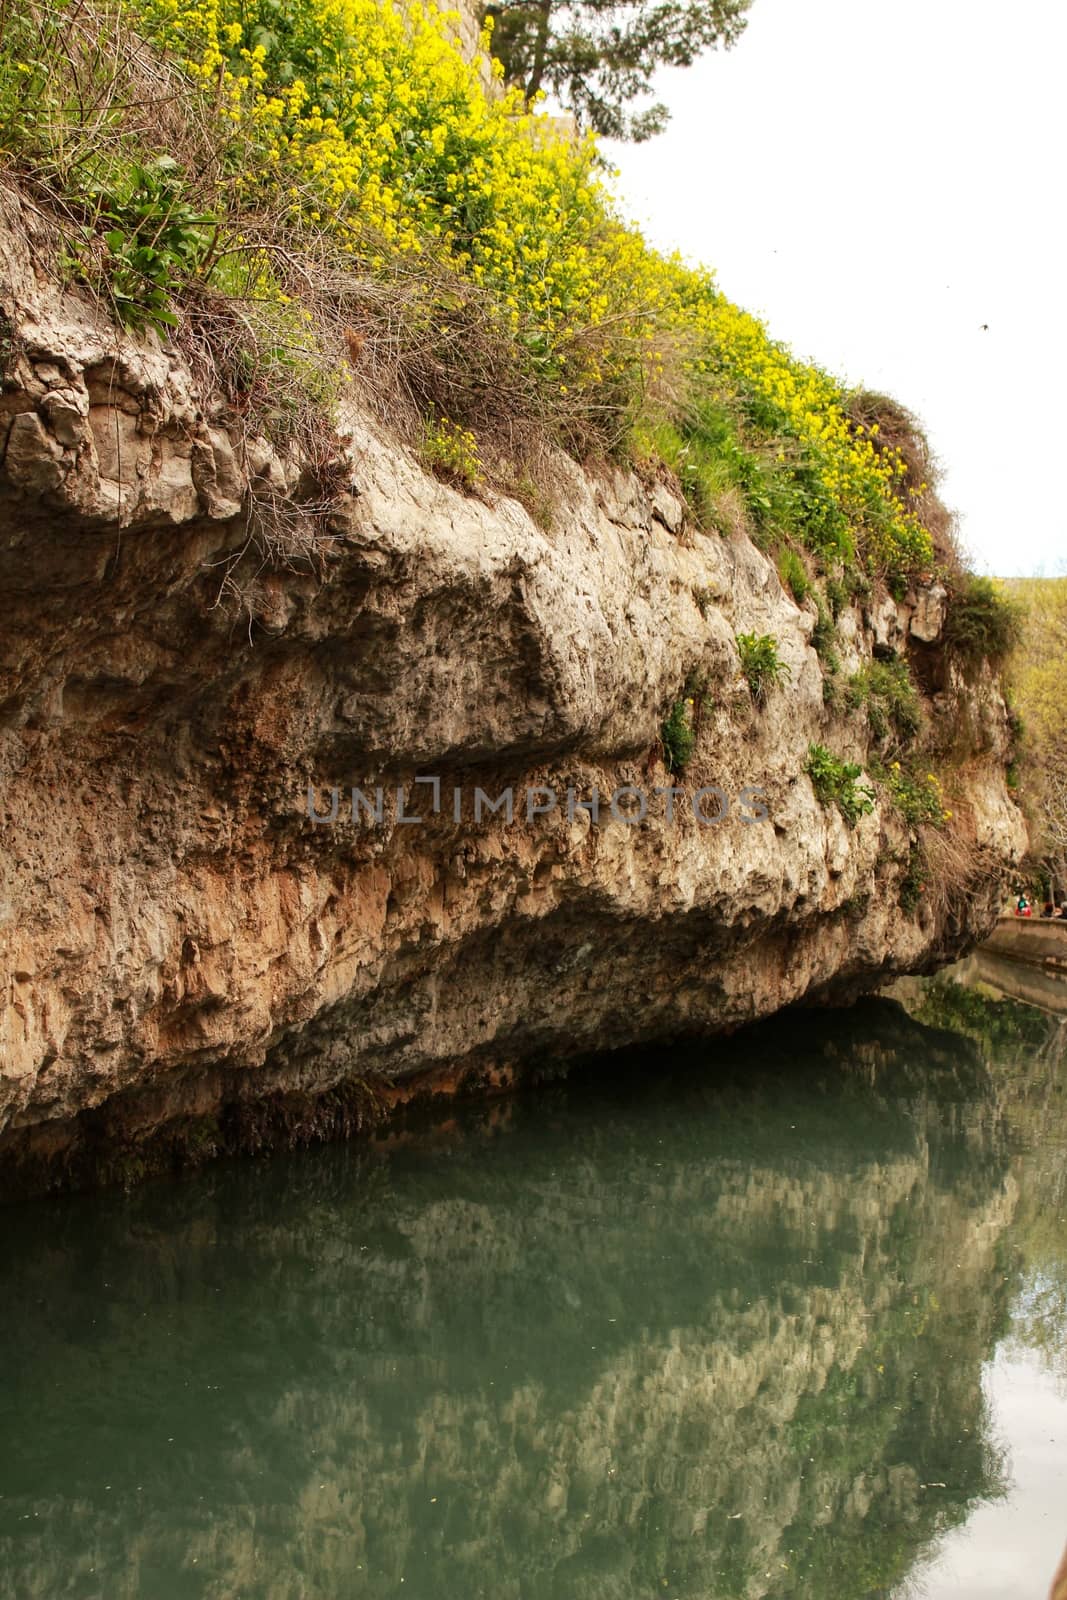 Water channel in Alcala del Jucar and vegetation